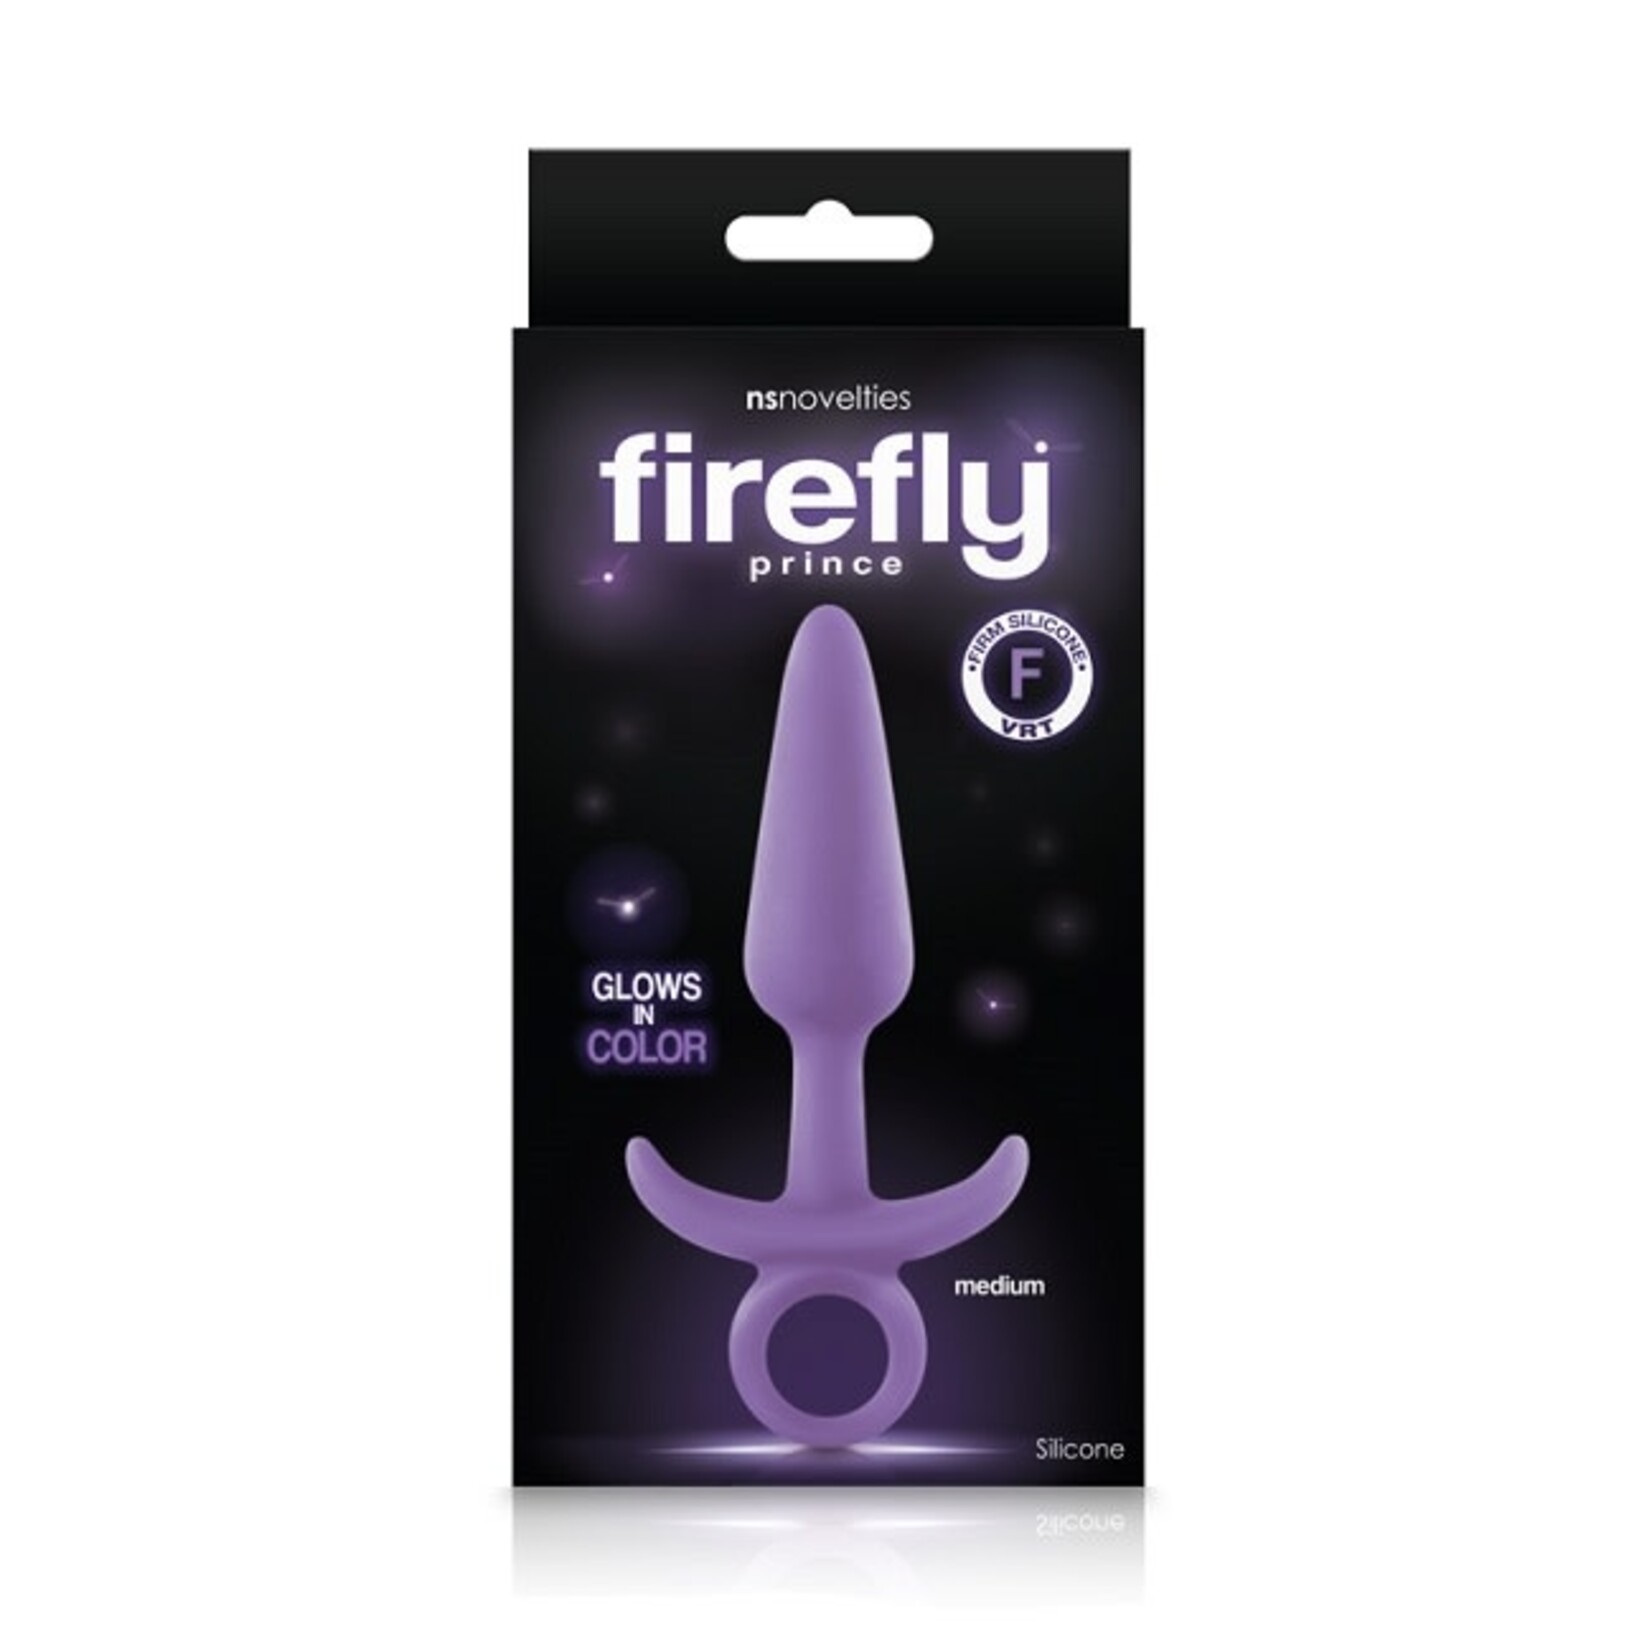 NS Novelties Firefly Prince Plug - Small